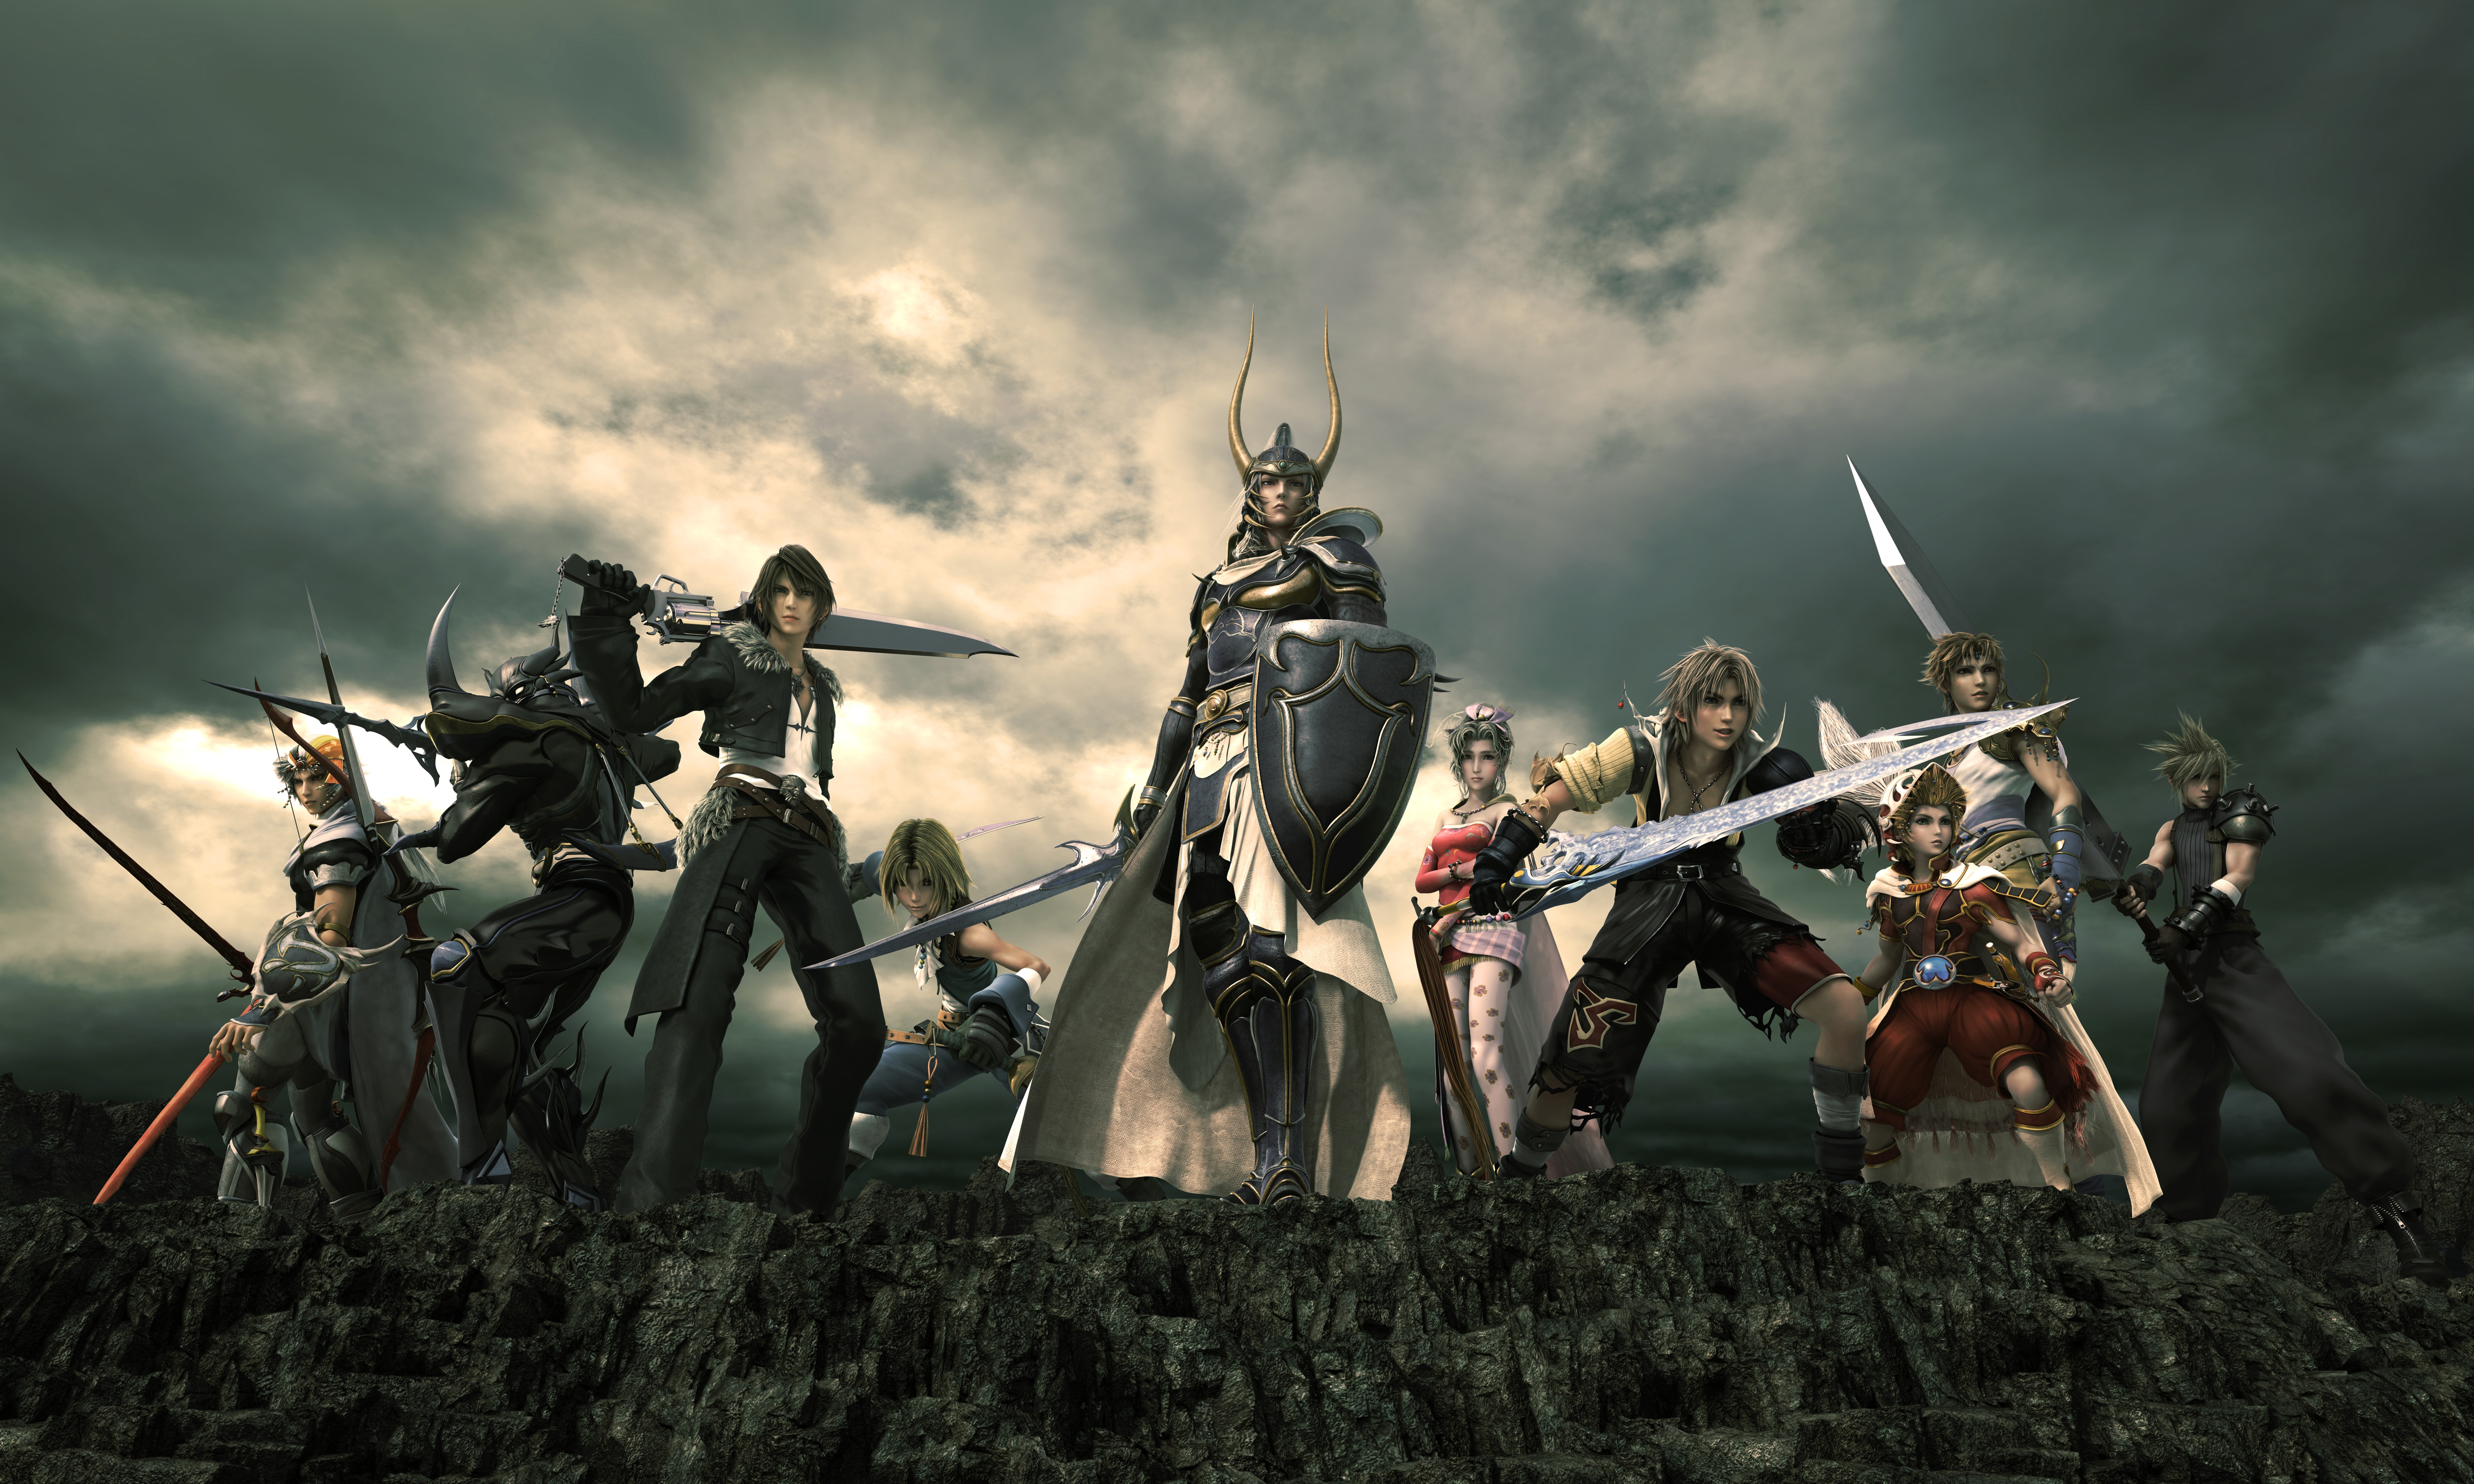 Dissidia Final Fantasy 4k Ultra HD Wallpaper Background Image